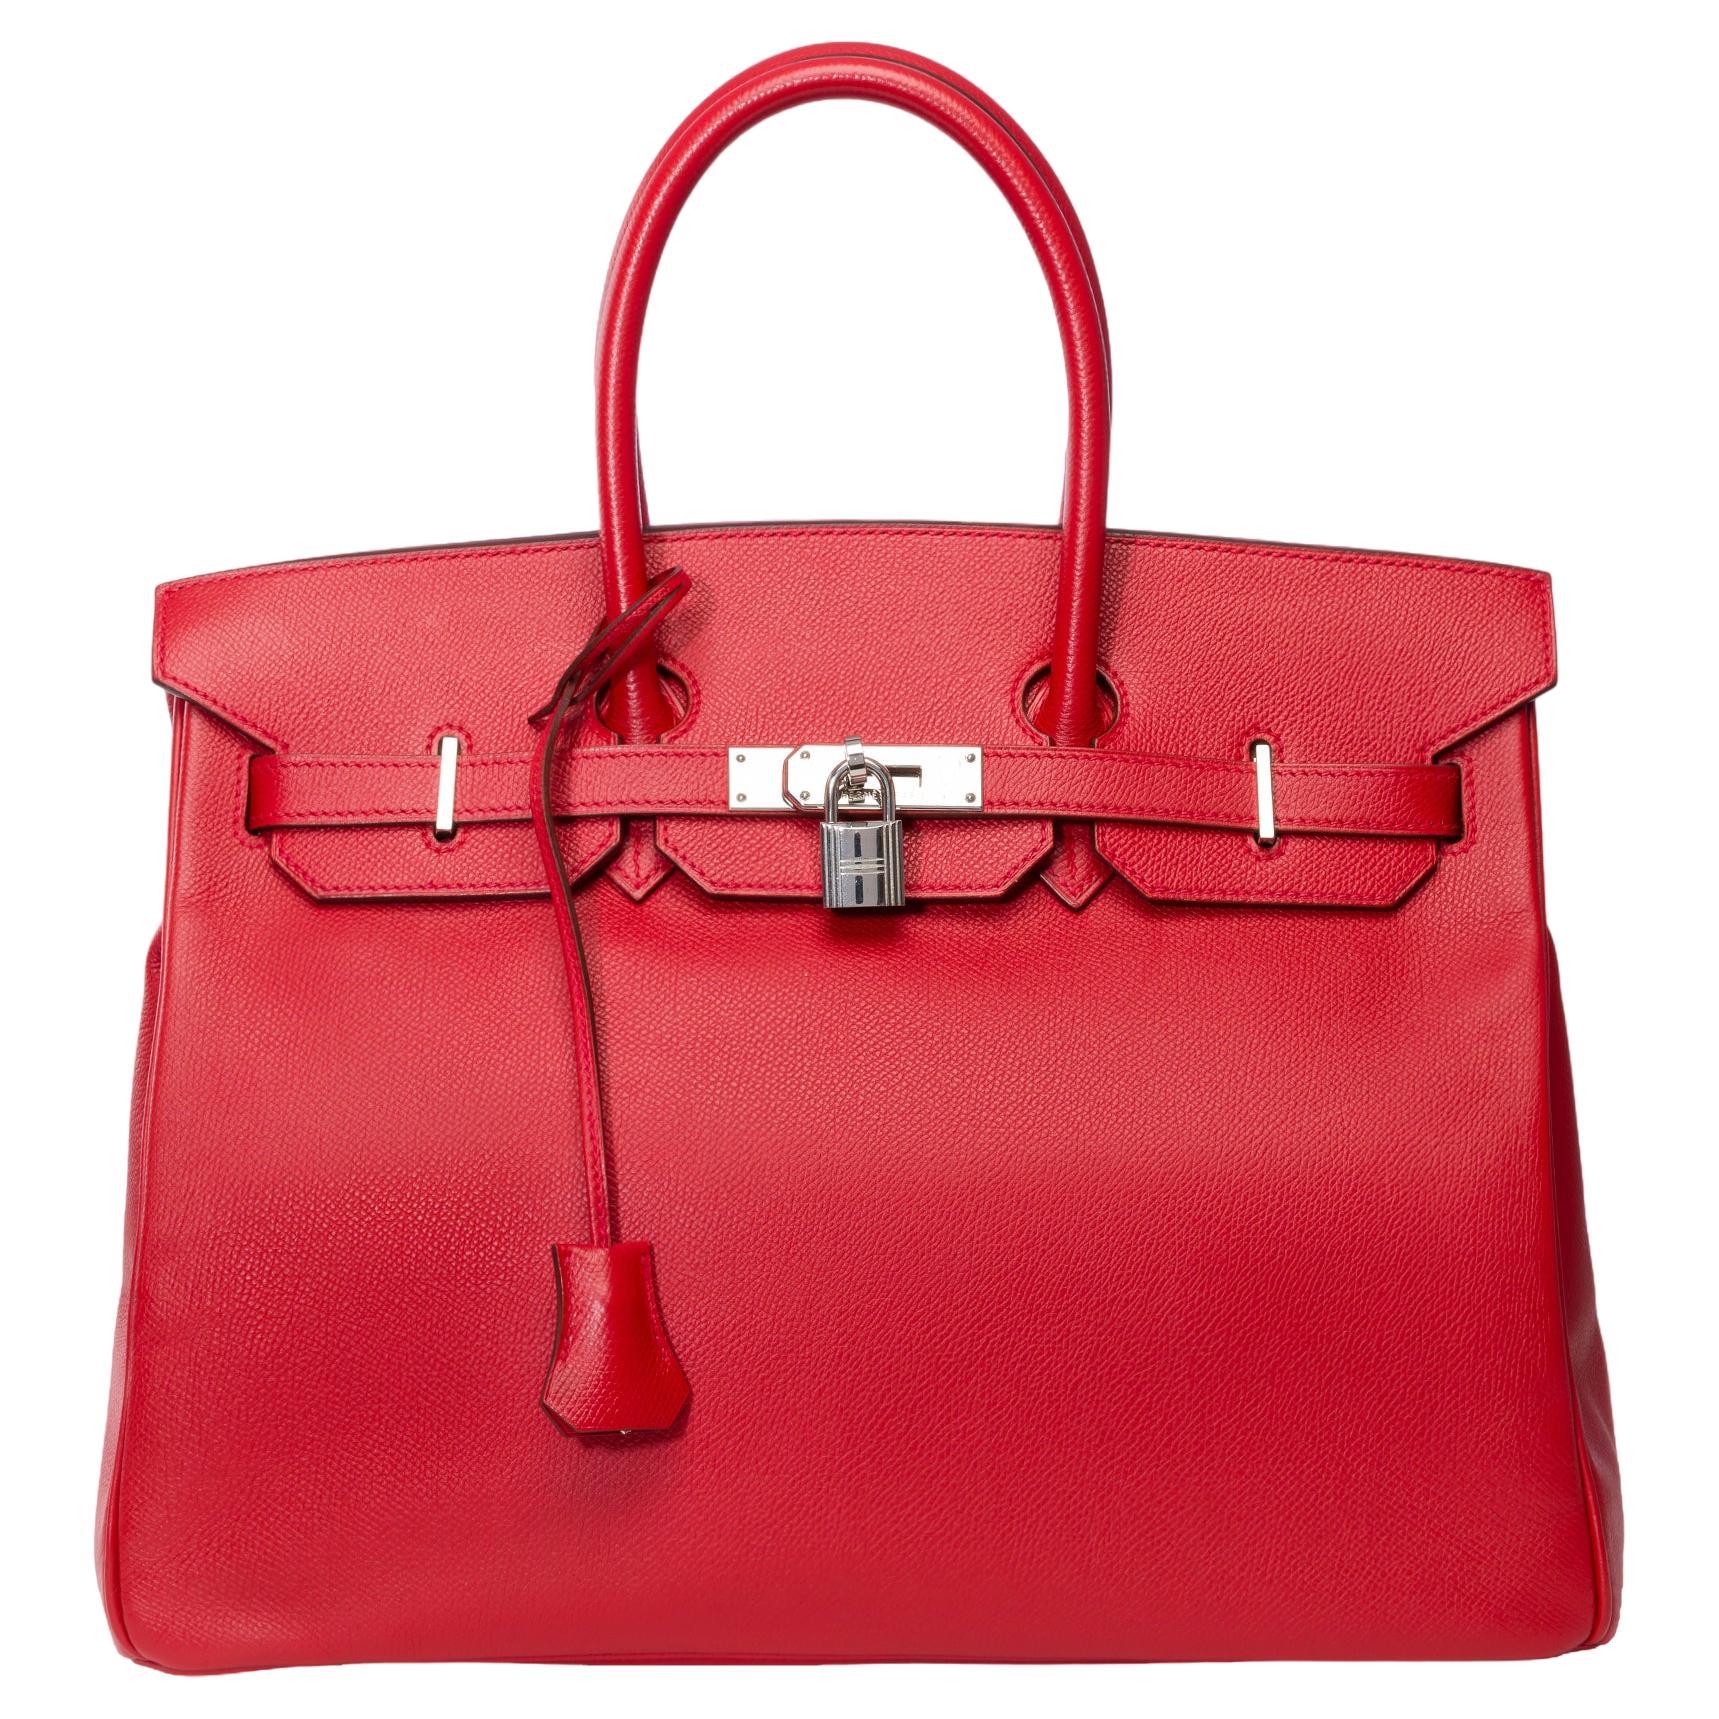 Amazing Hermès Birkin 35 handbag in Rouge Garance Epsom leather, SHW